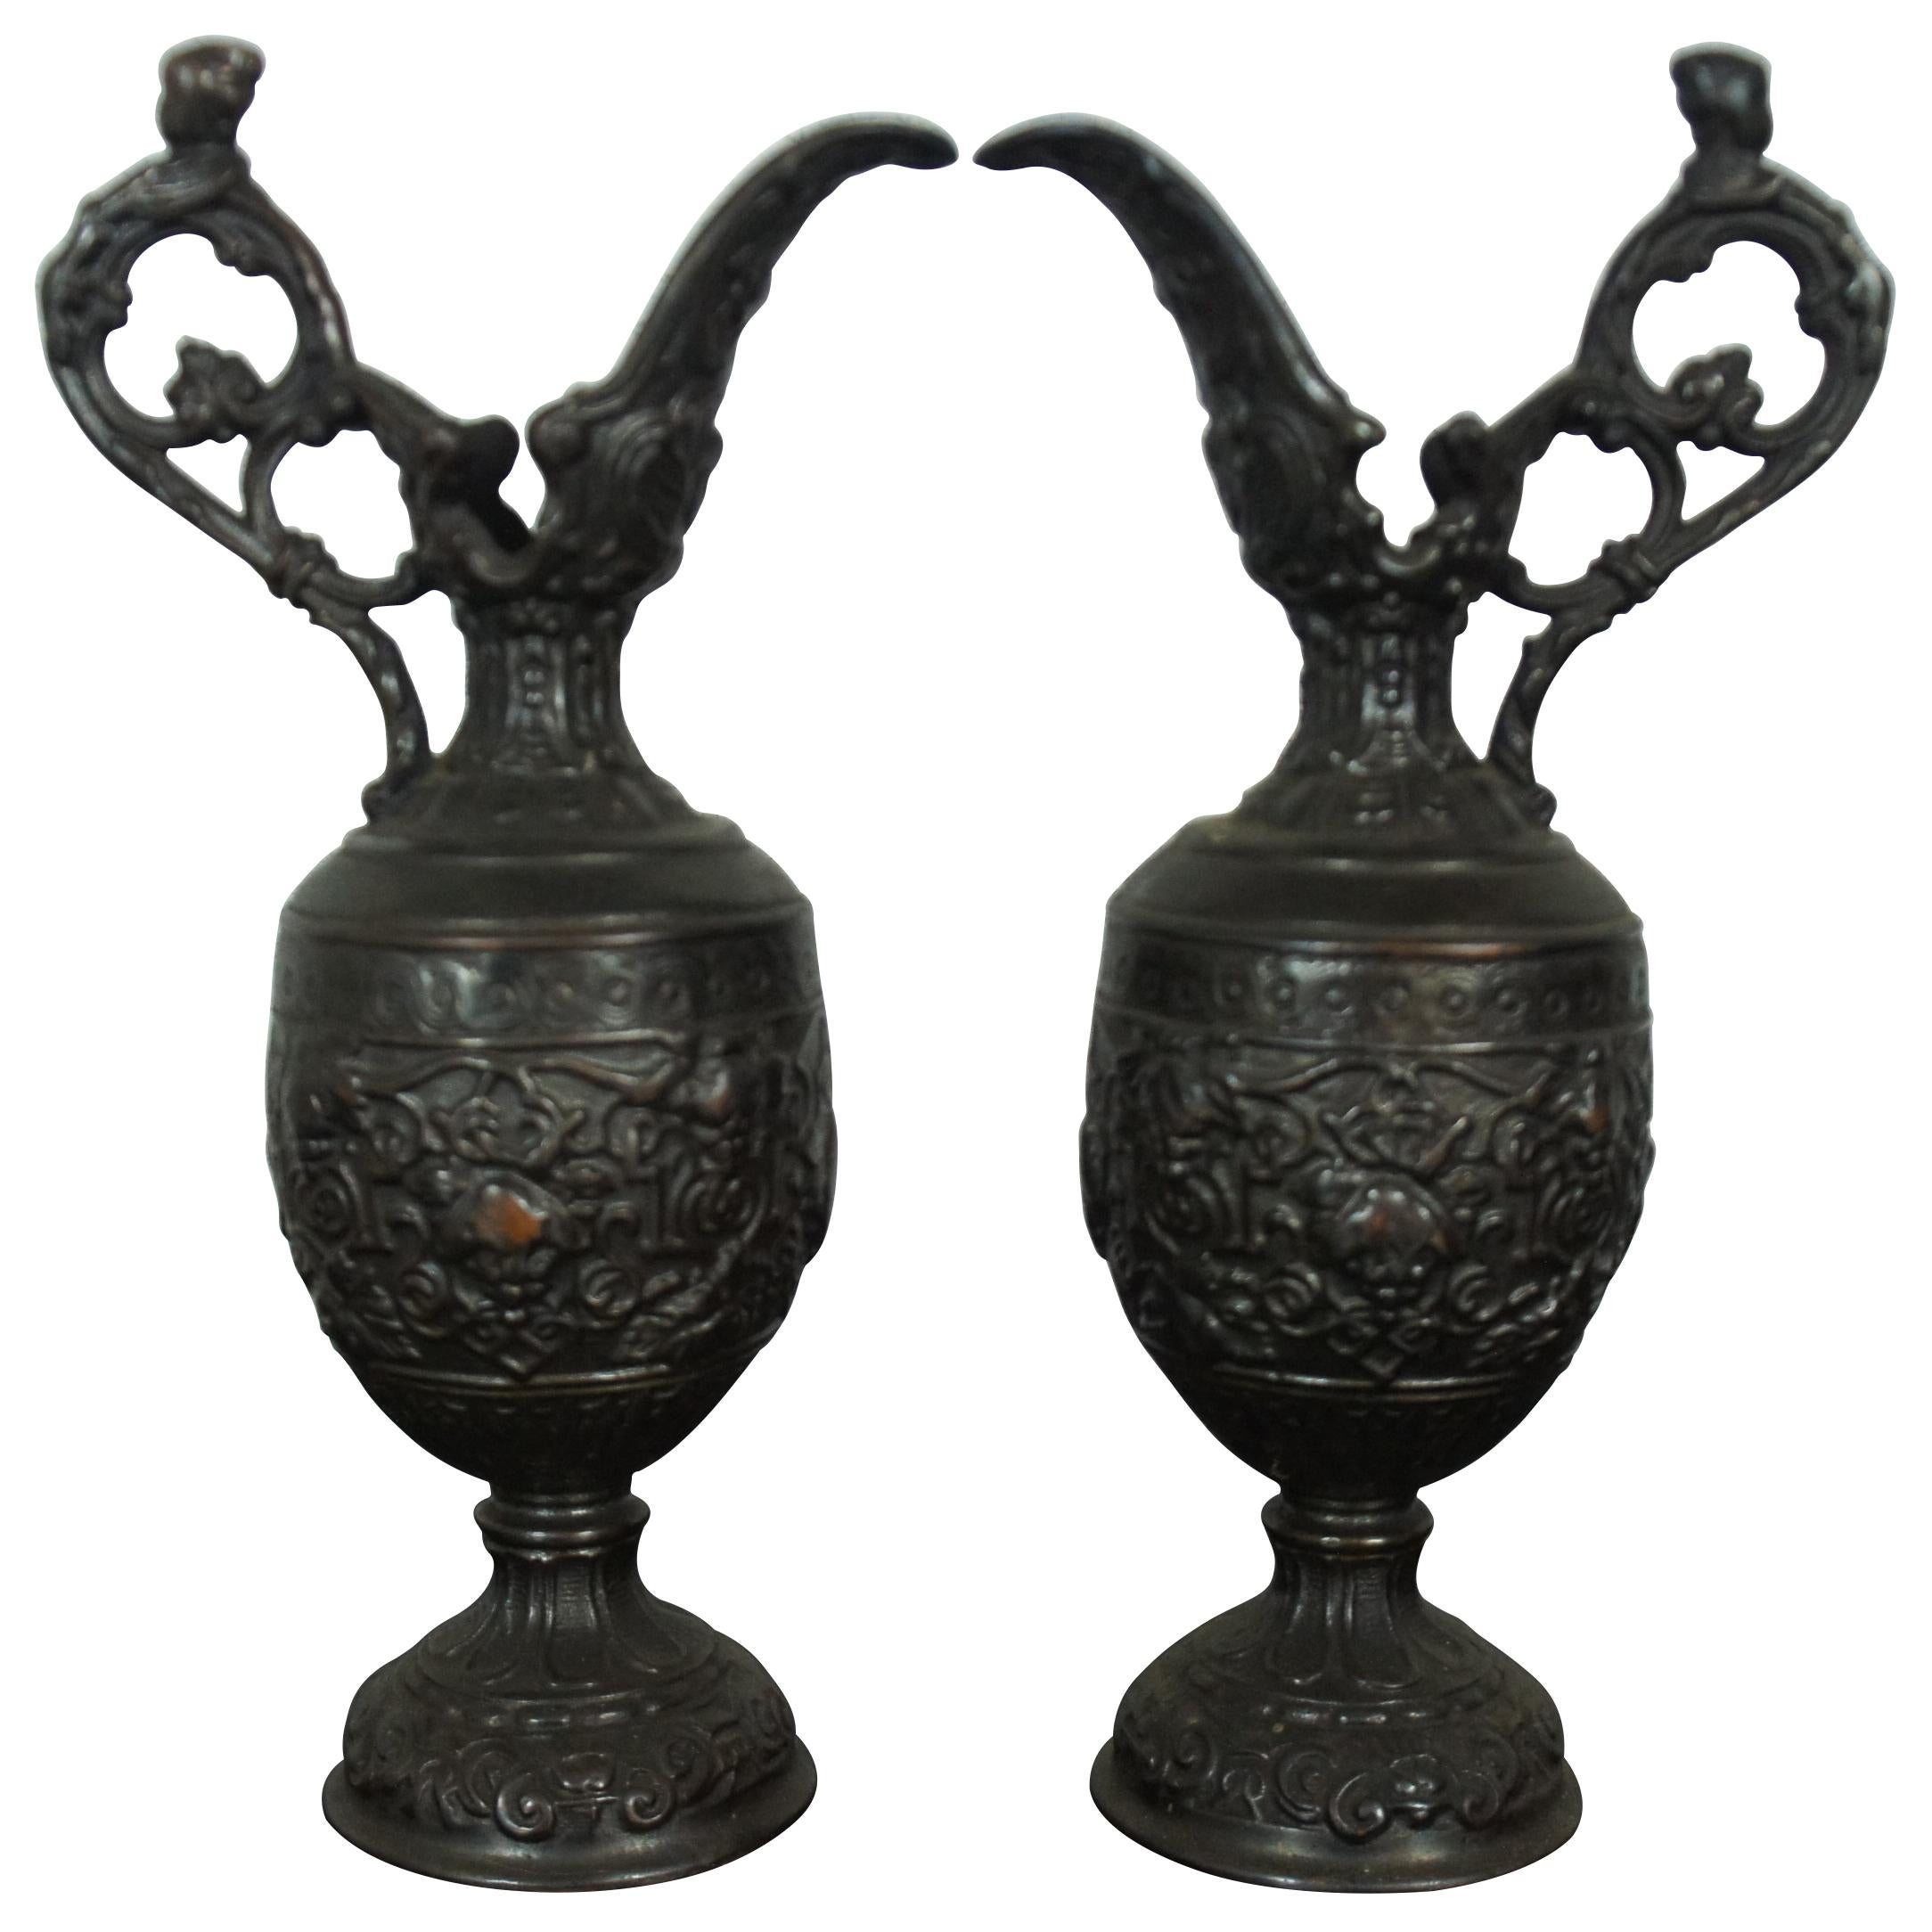 Pair of antique spelter bronze ornamental garniture baluster ewer shaped mantel urns. Measure: 13